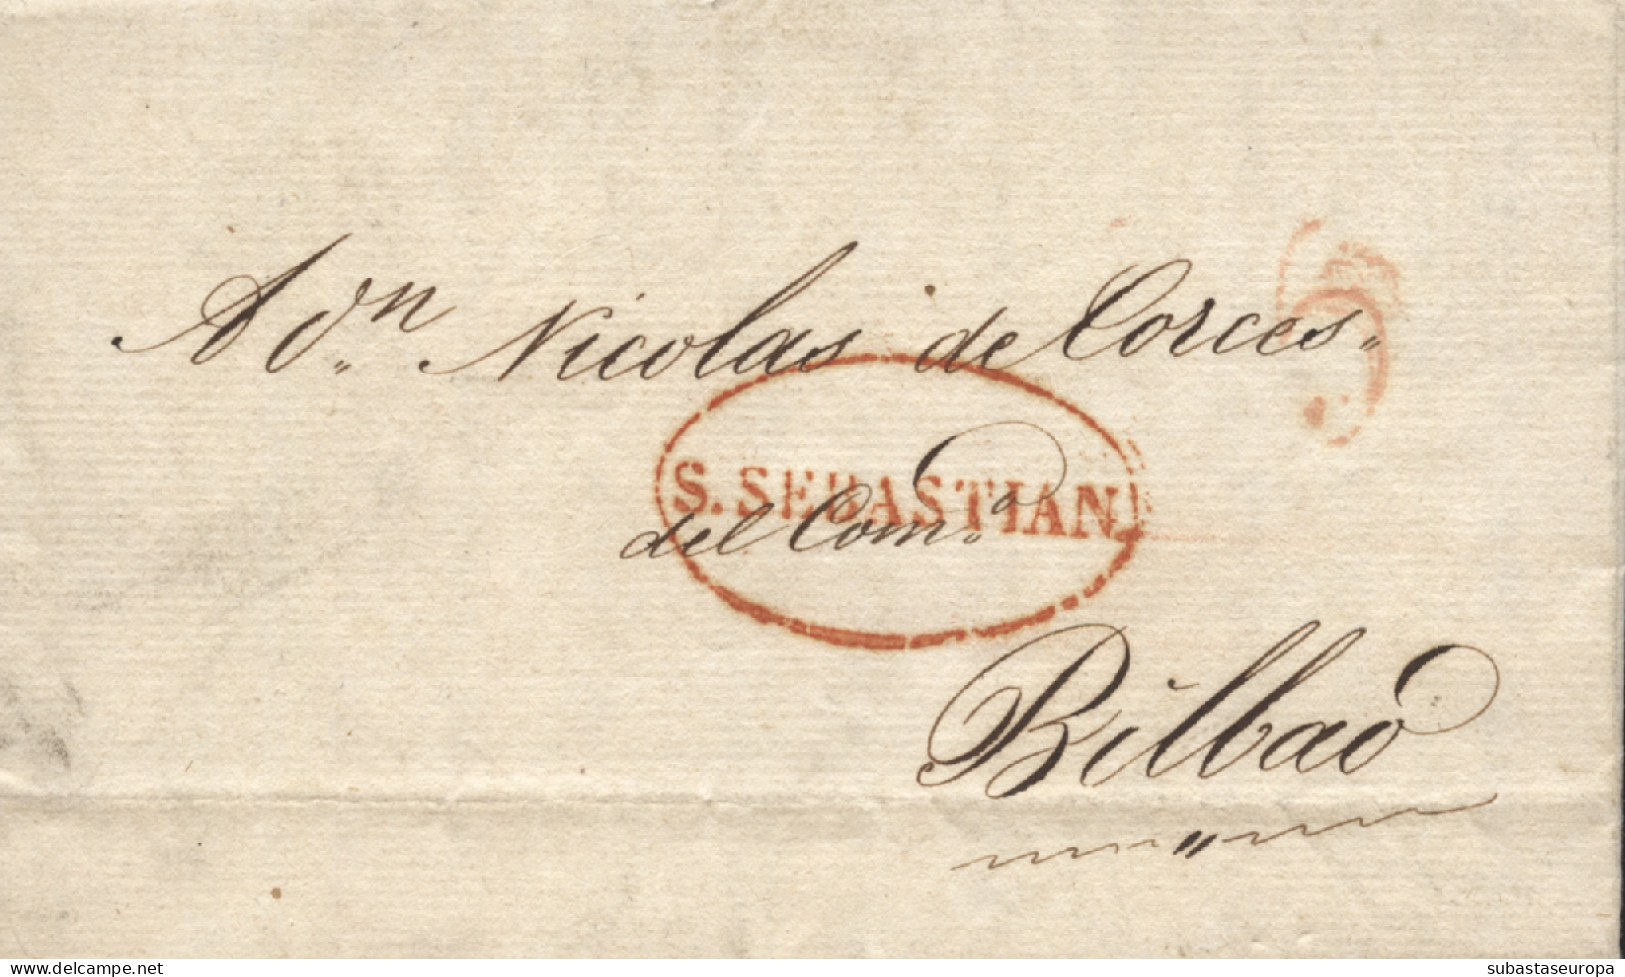 D.P. 11. 1830 (20 SEP). Carta De San Sebastián A Bilbao. Marca 25R. Preciosa. - ...-1850 Prephilately